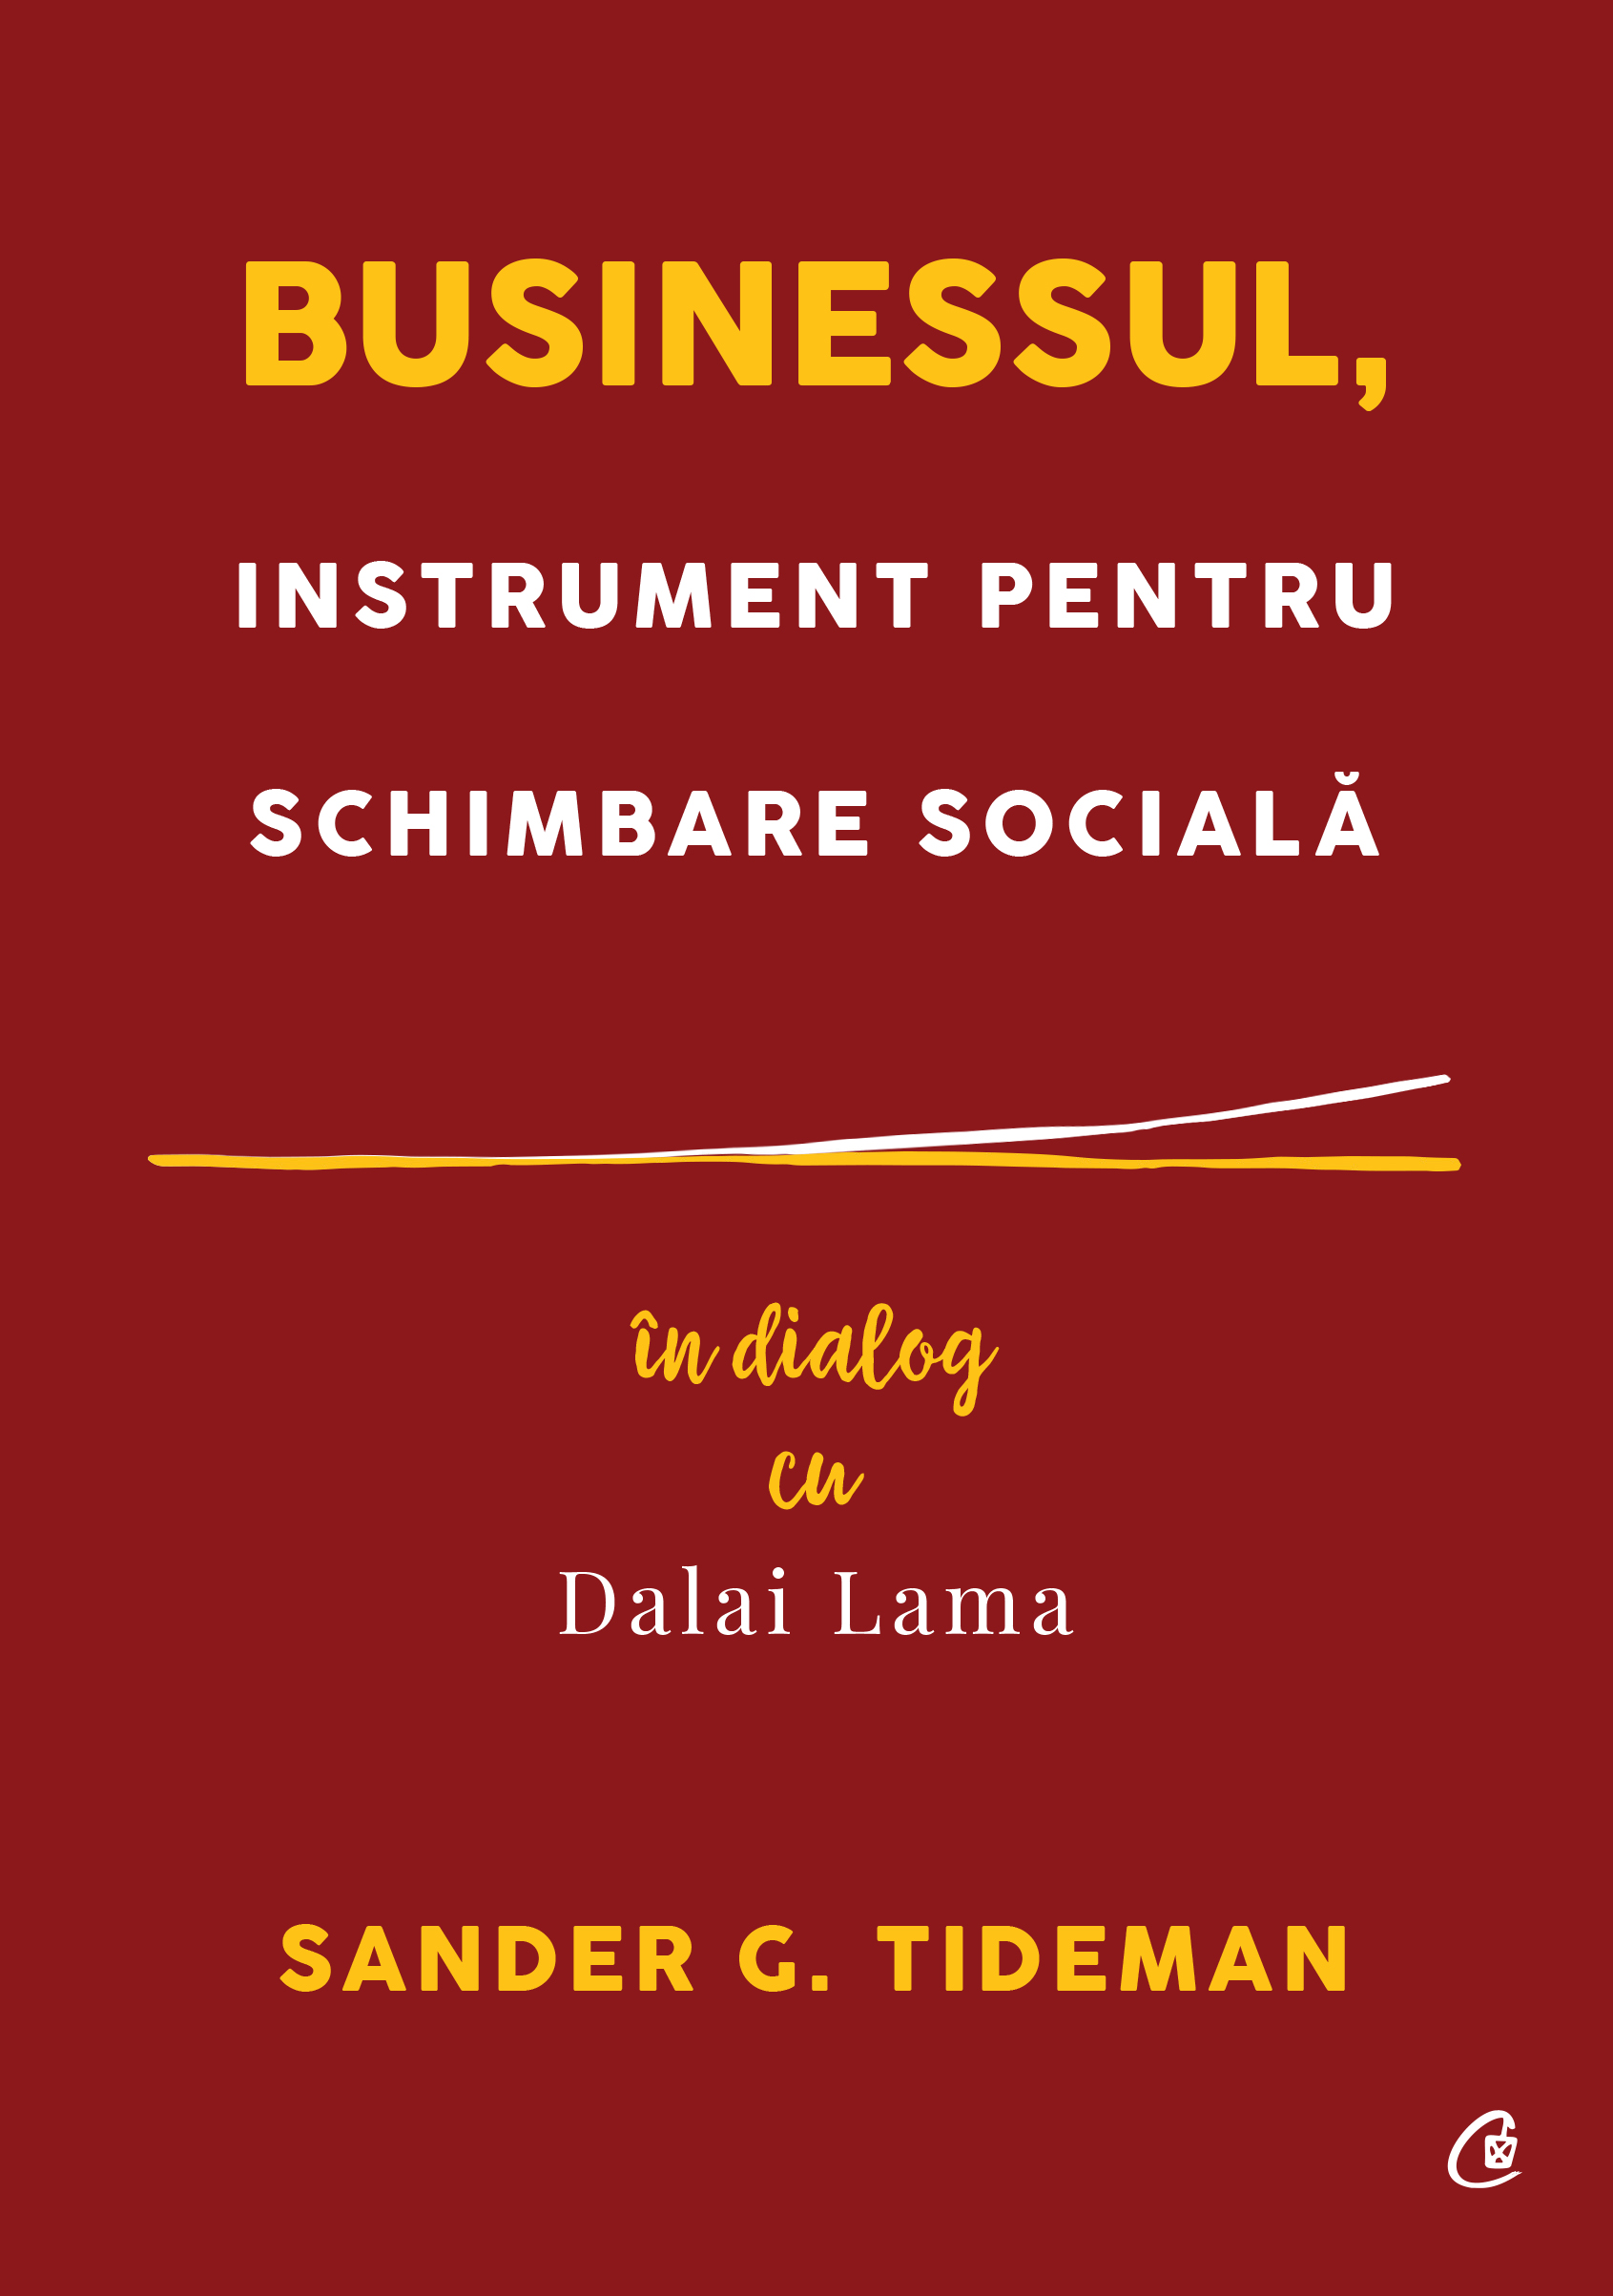 Businessul, instrument pentru schimbare sociala | Sander G. Tideman carturesti.ro poza bestsellers.ro